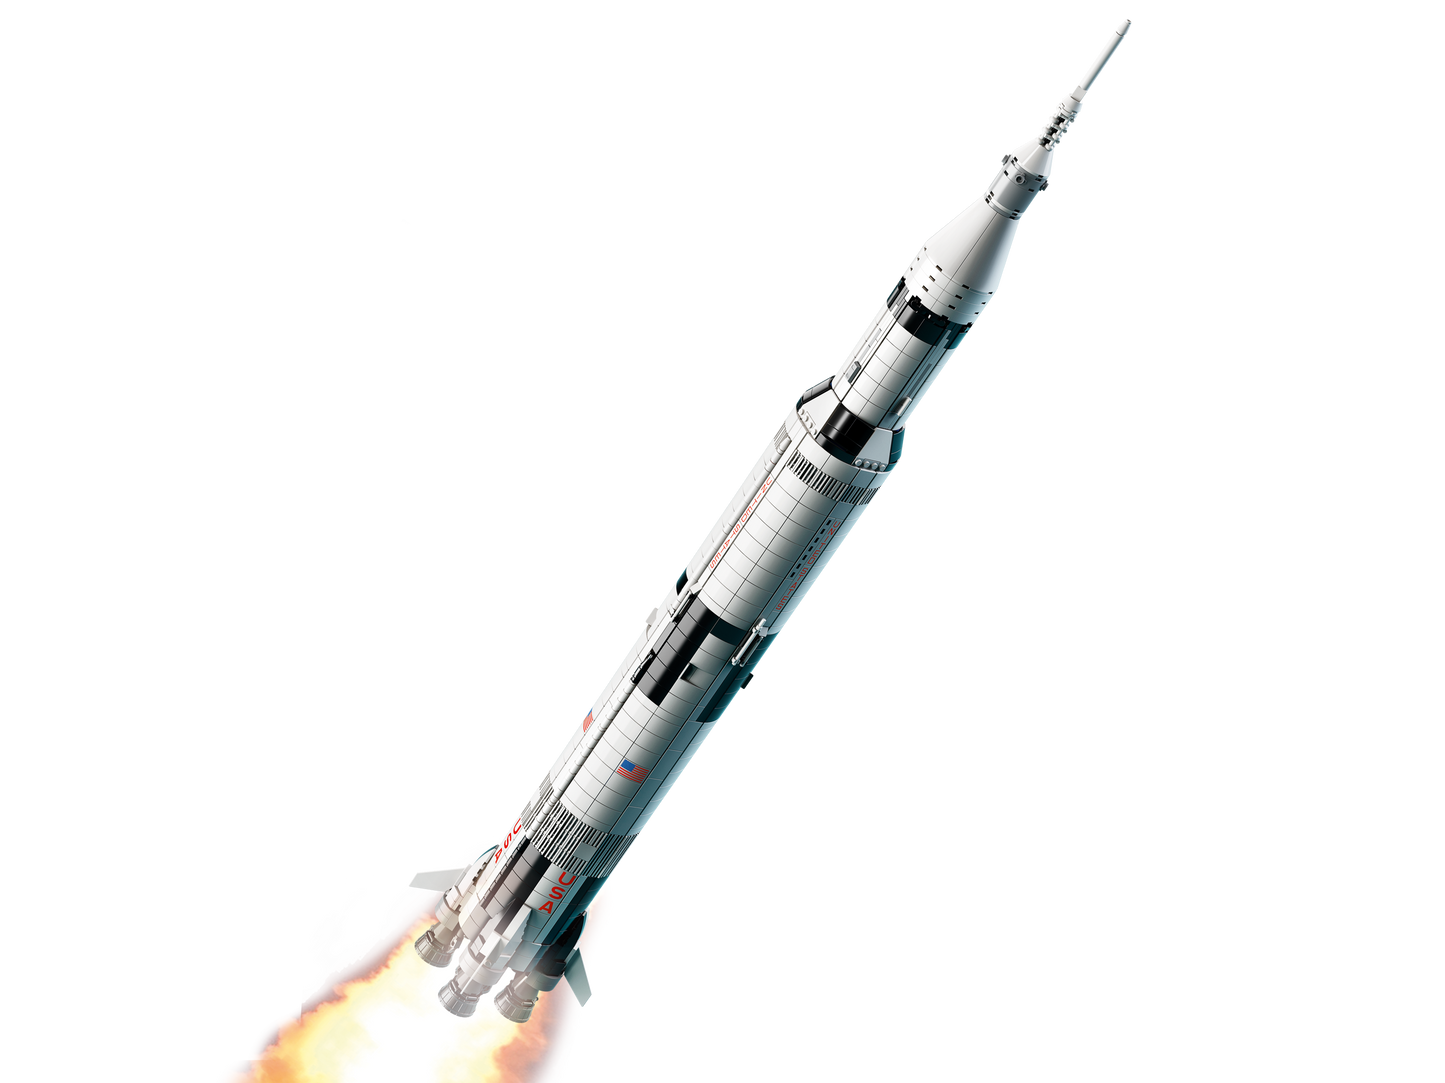 NASA Apollo Saturn V